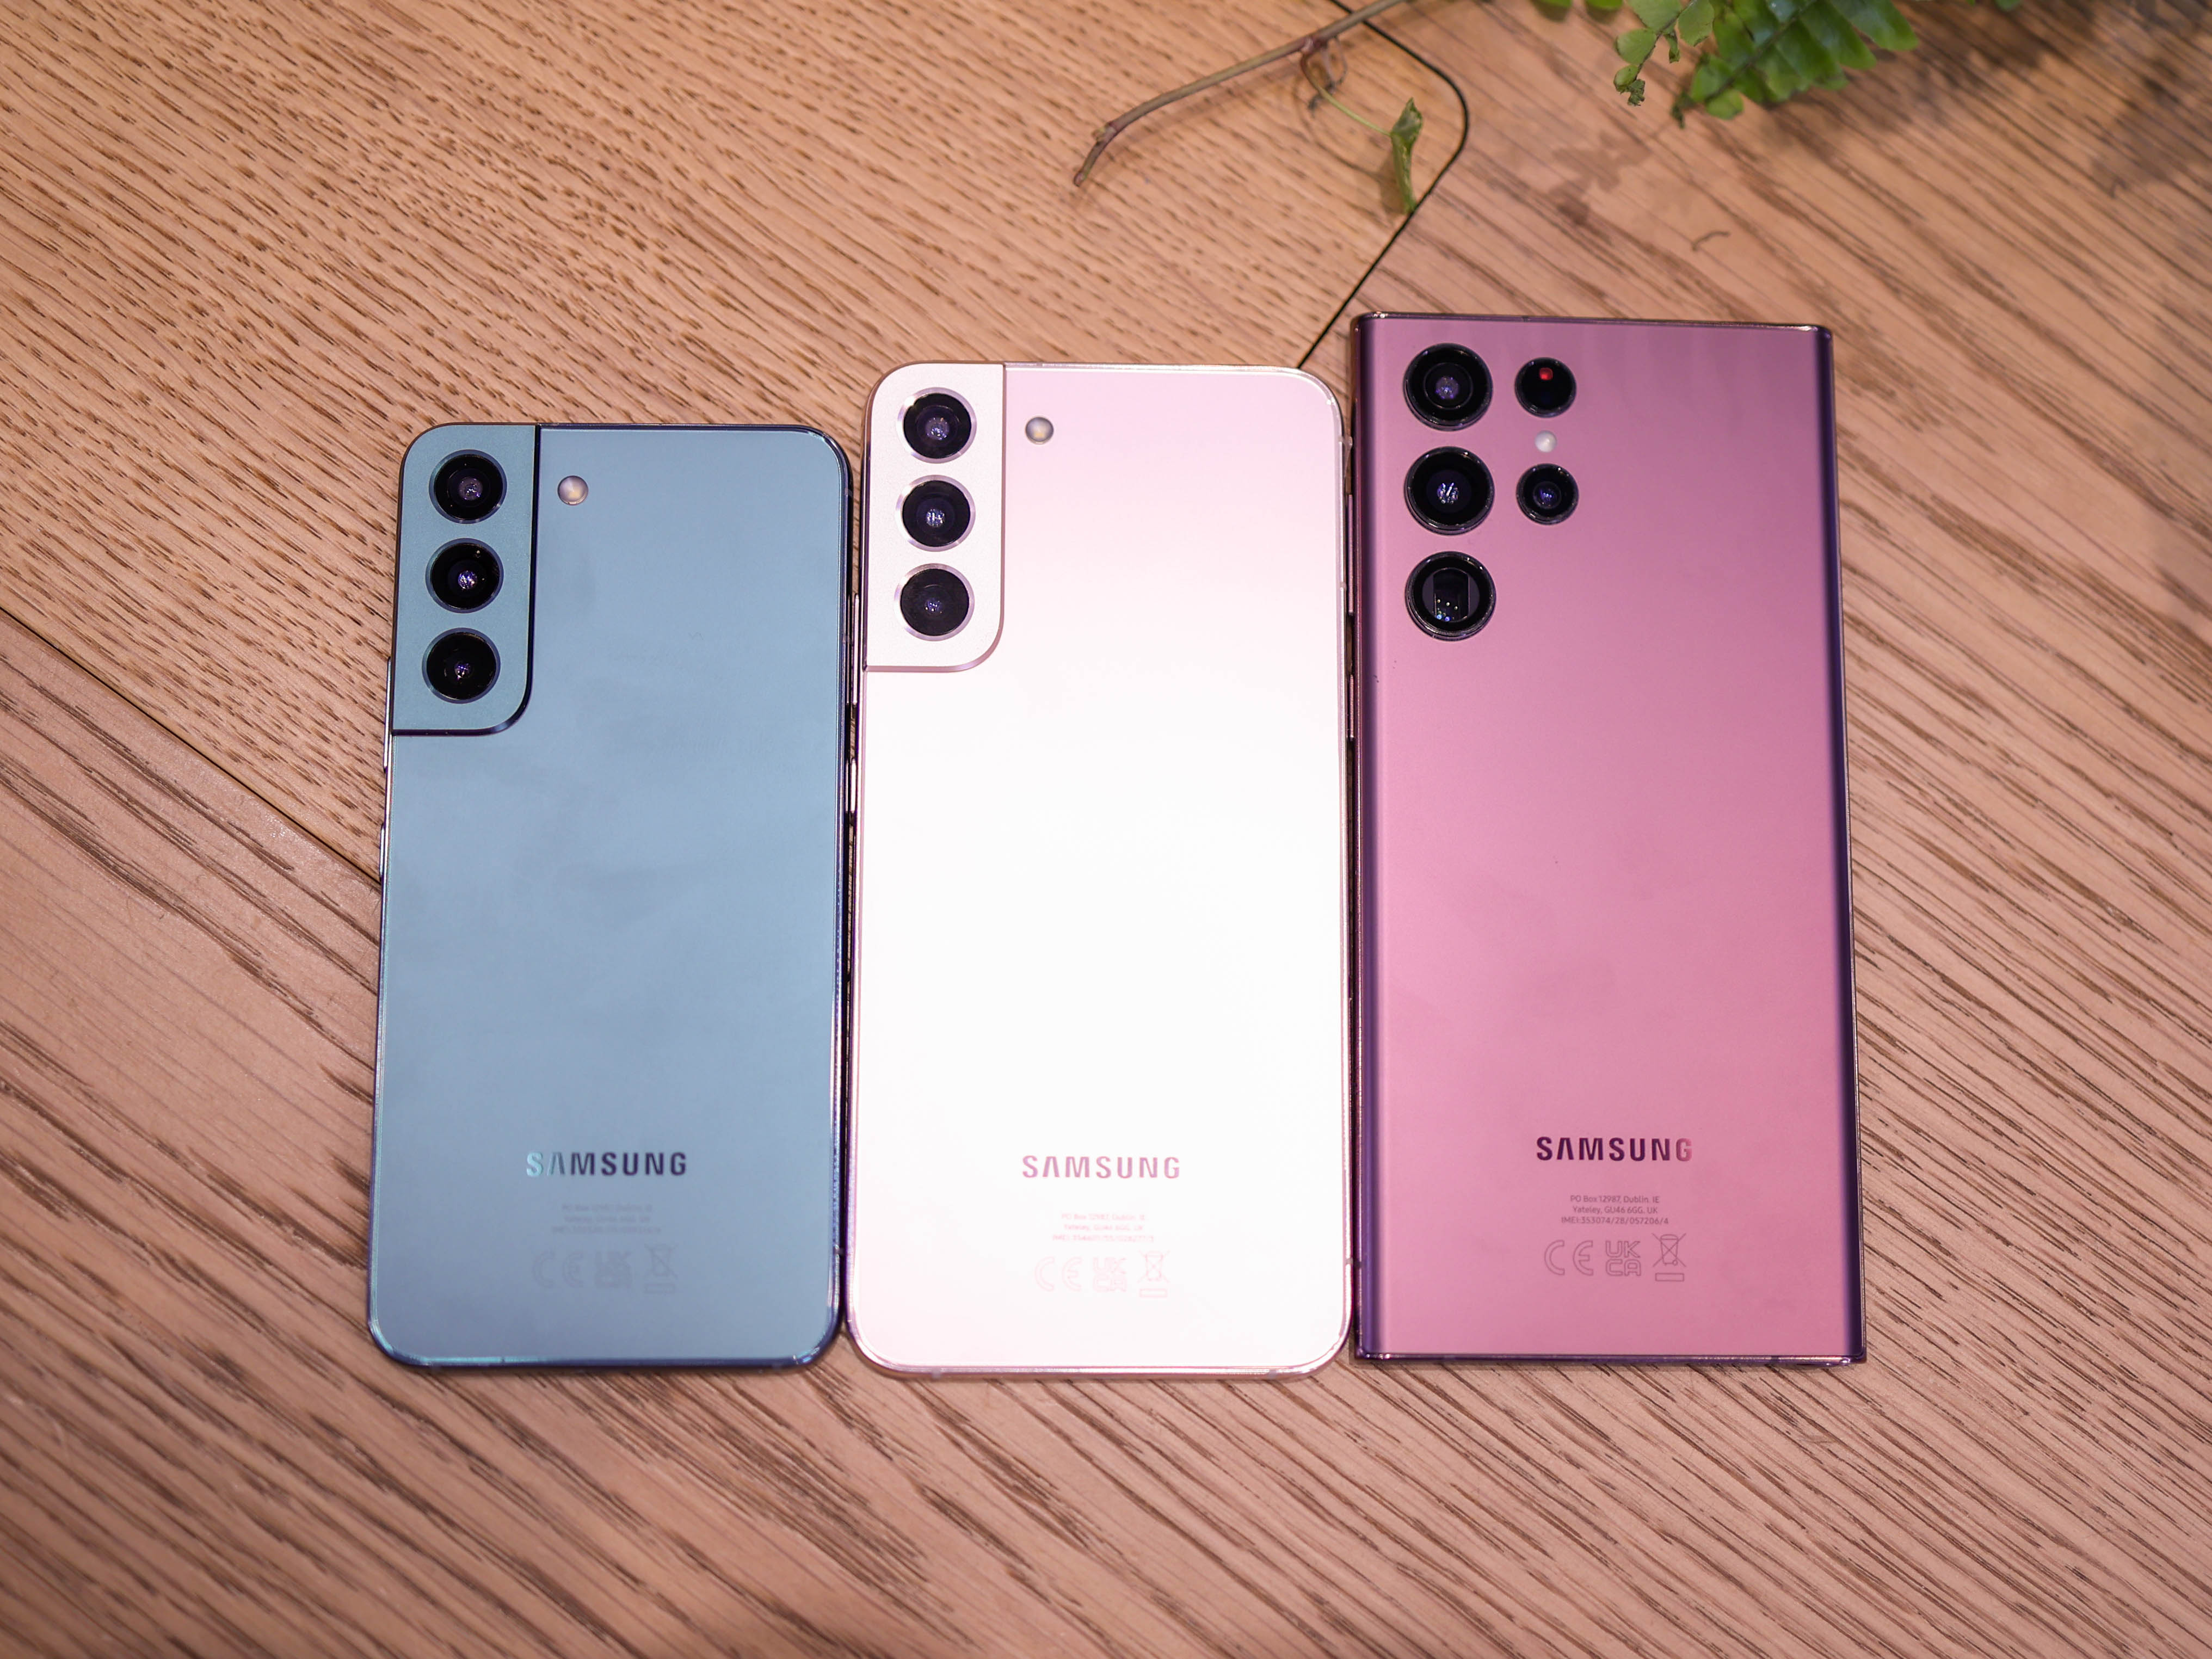 Samsung Galaxy S22 vs S22+ vs S22 Ultra: the three phones compared